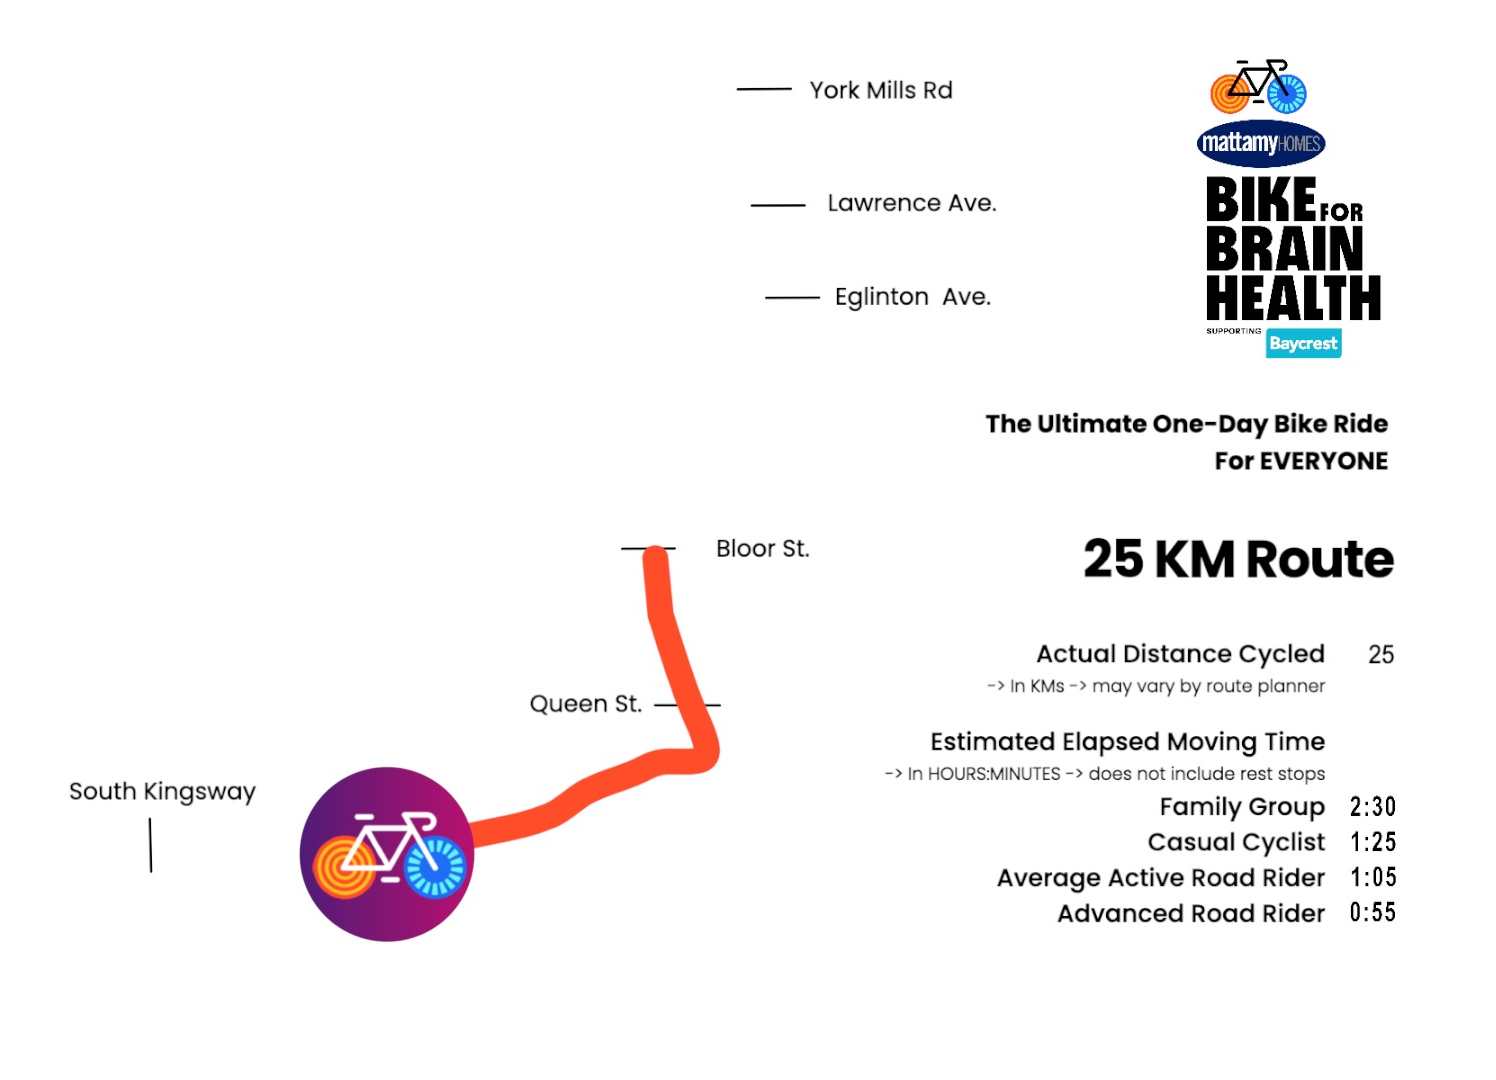 Bike for Brain Health 25 KM Map